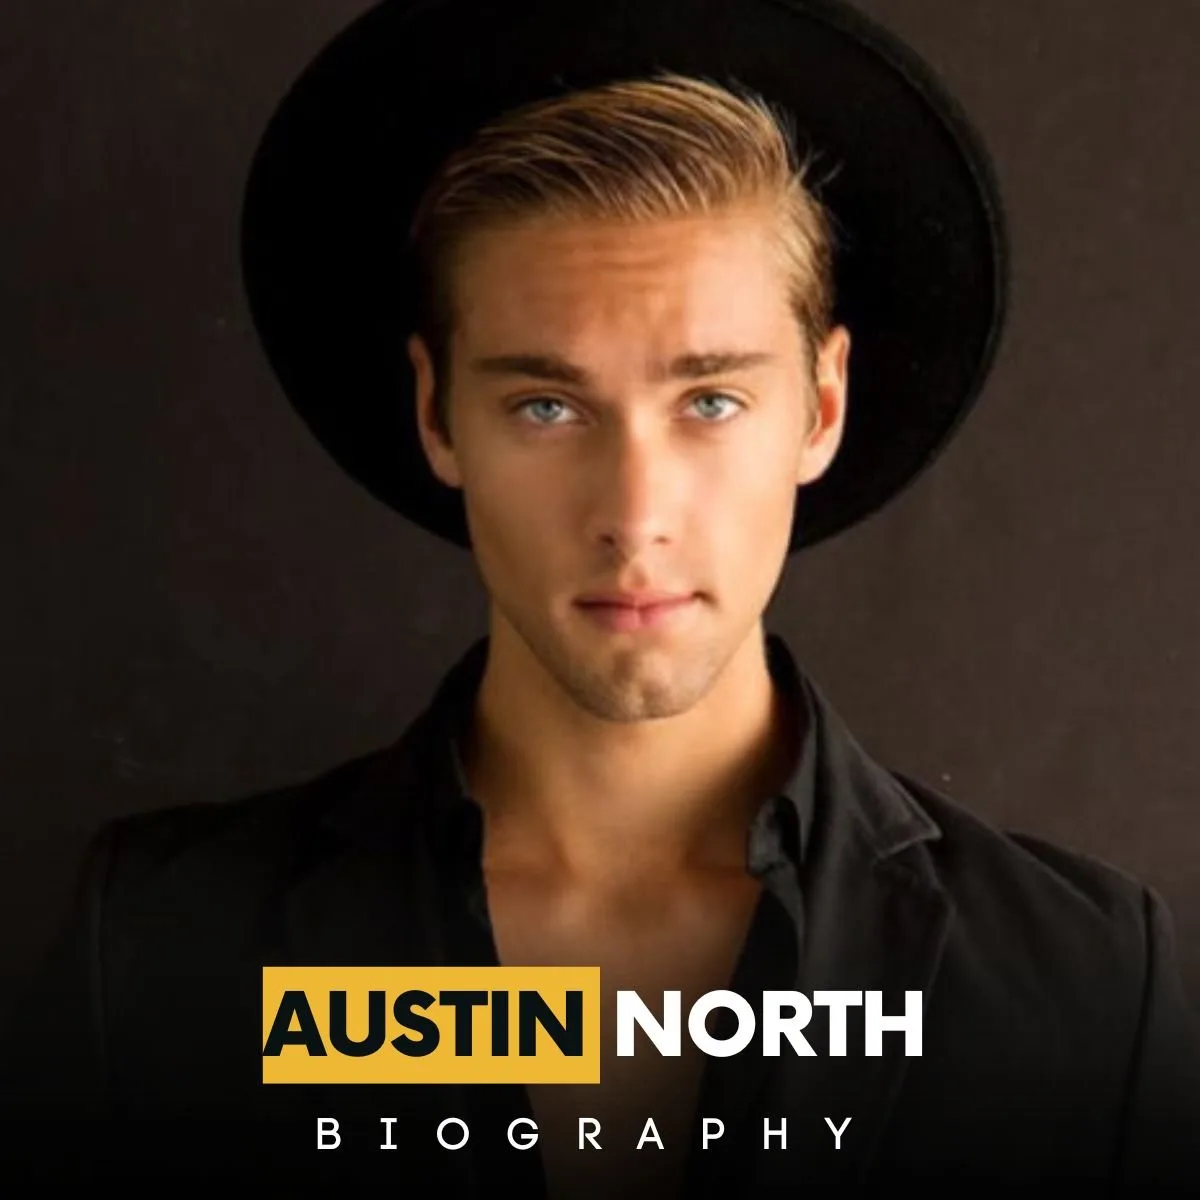 Austin North Biography